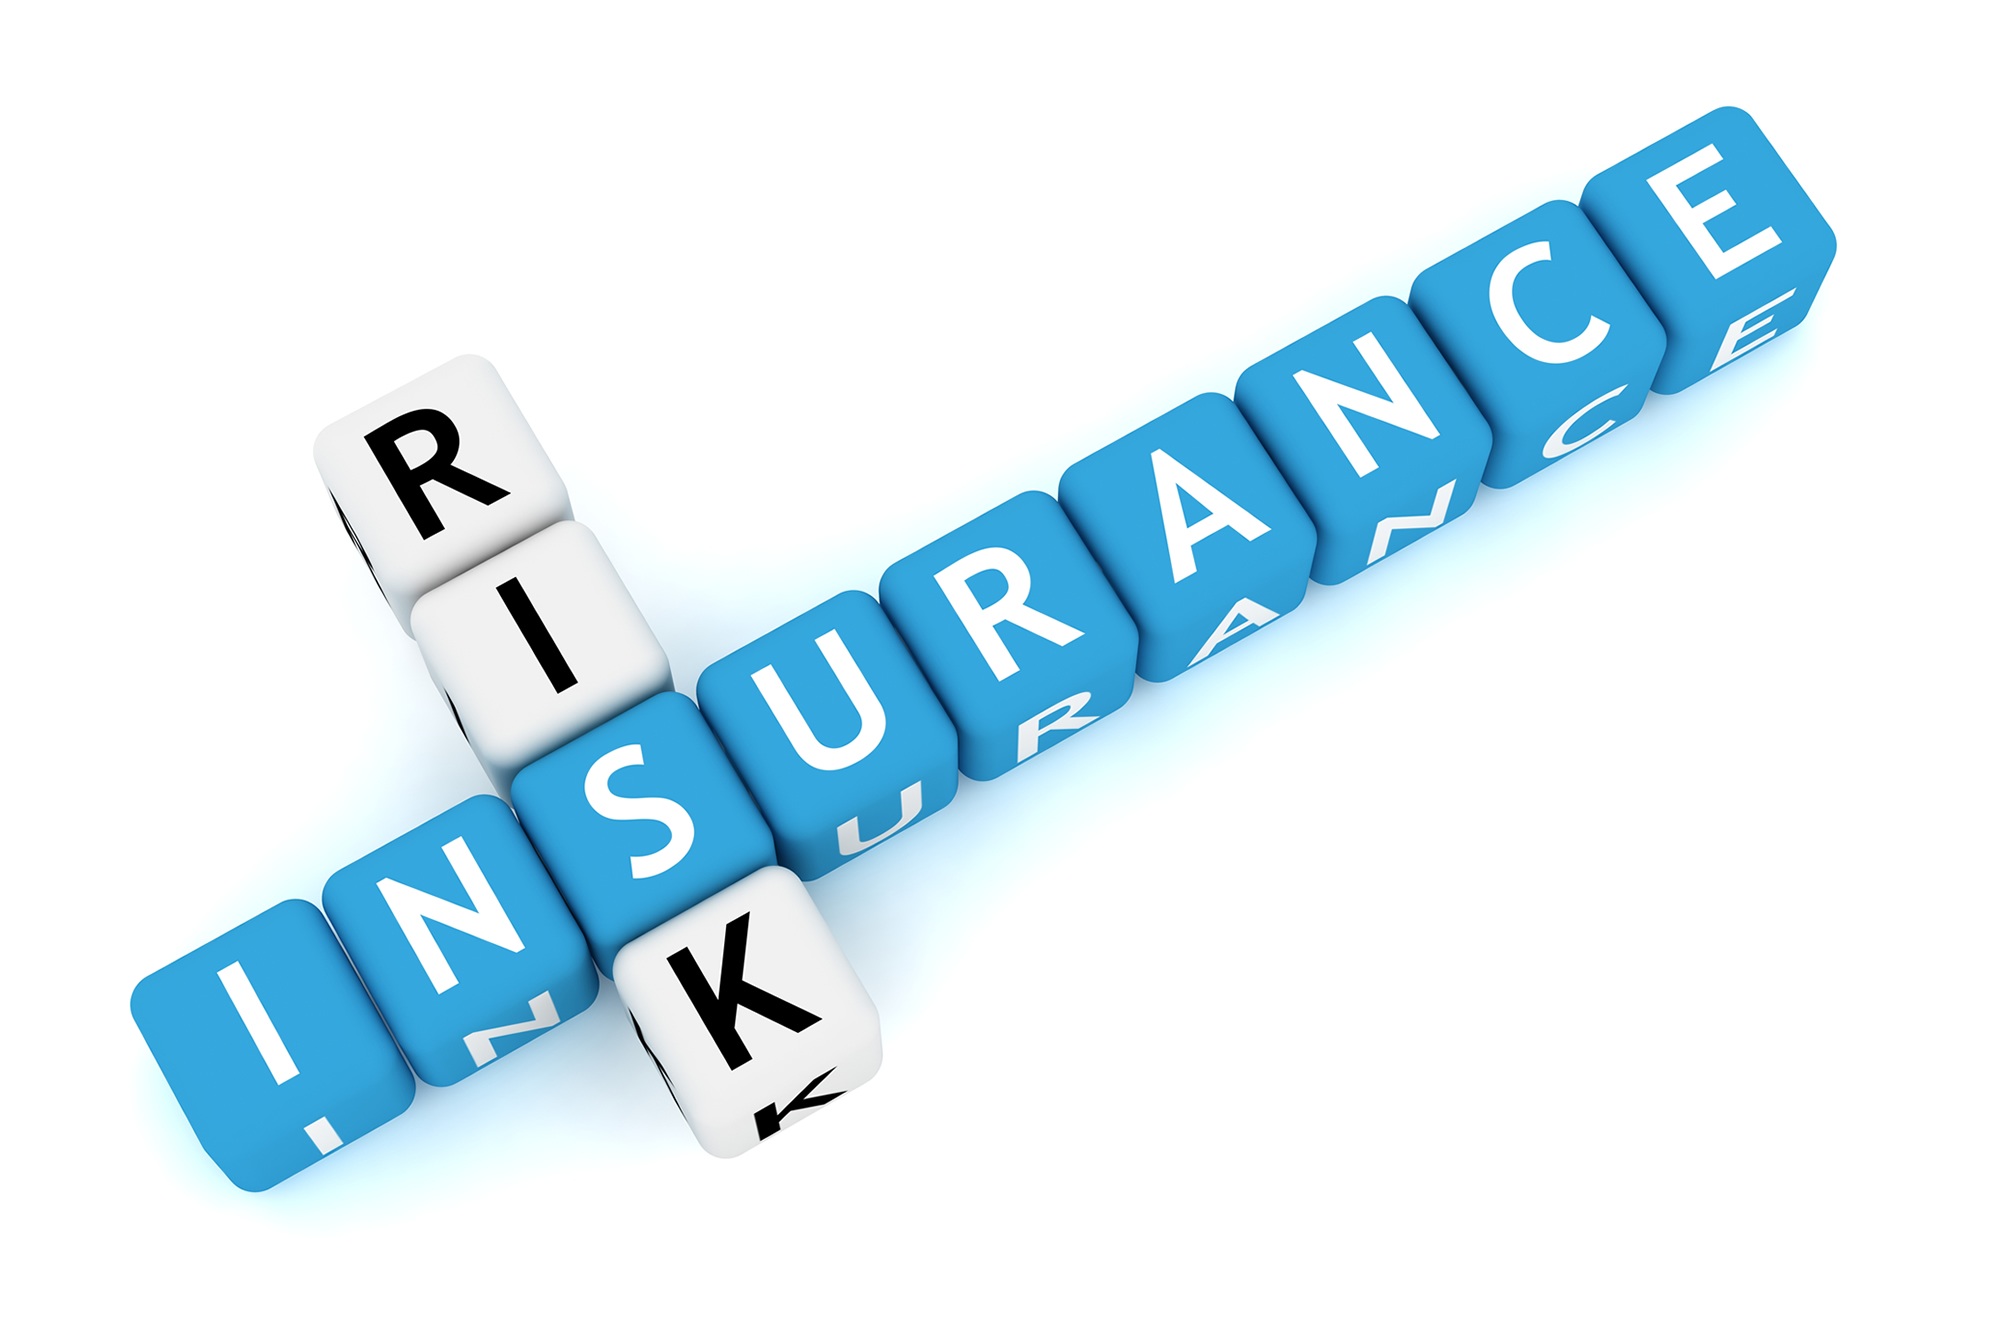 Southern Vanguard Insurance Risk Management